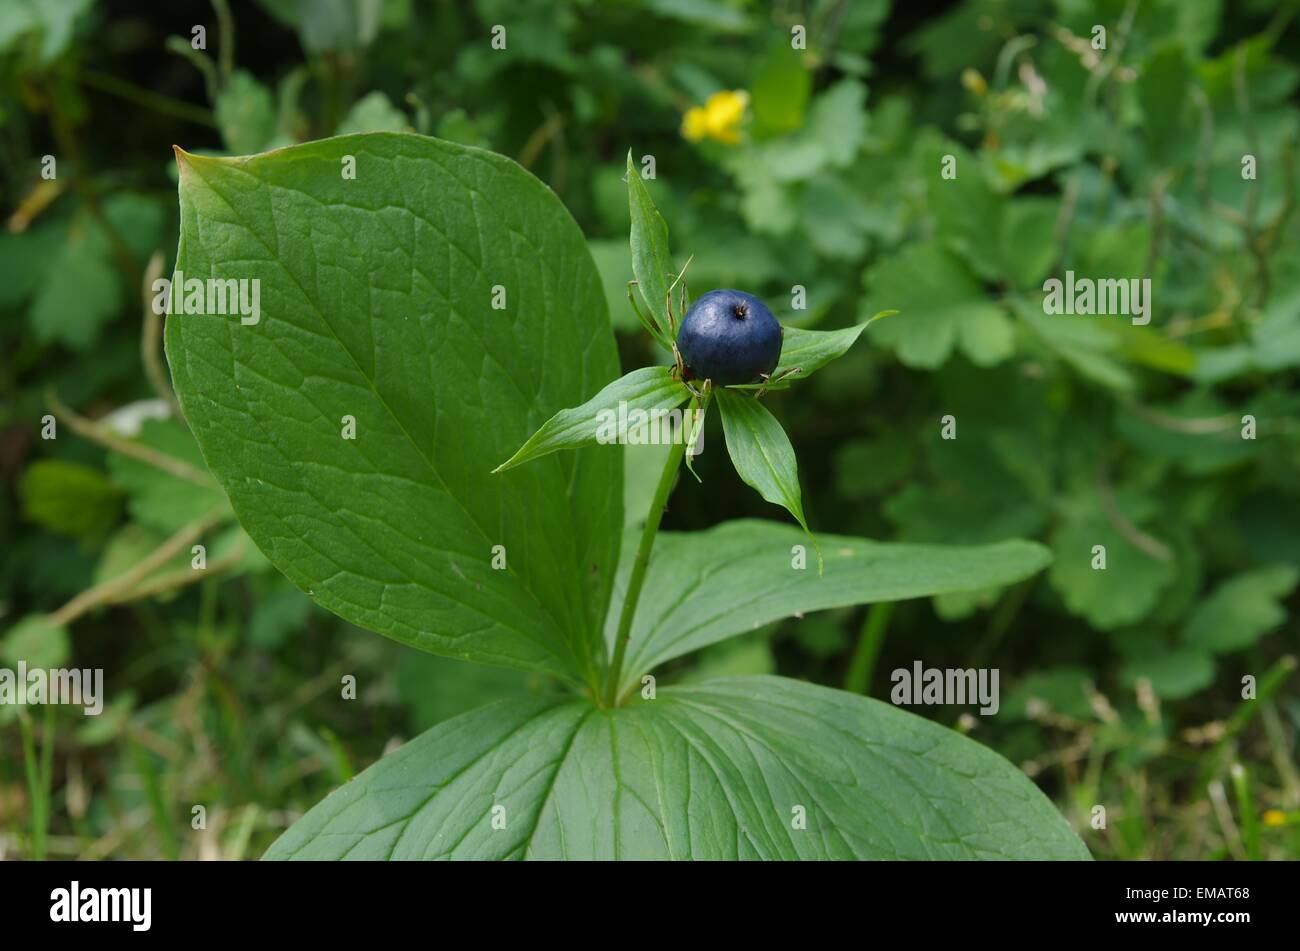 paris quadrifolia wild plant with berry Stock Photo